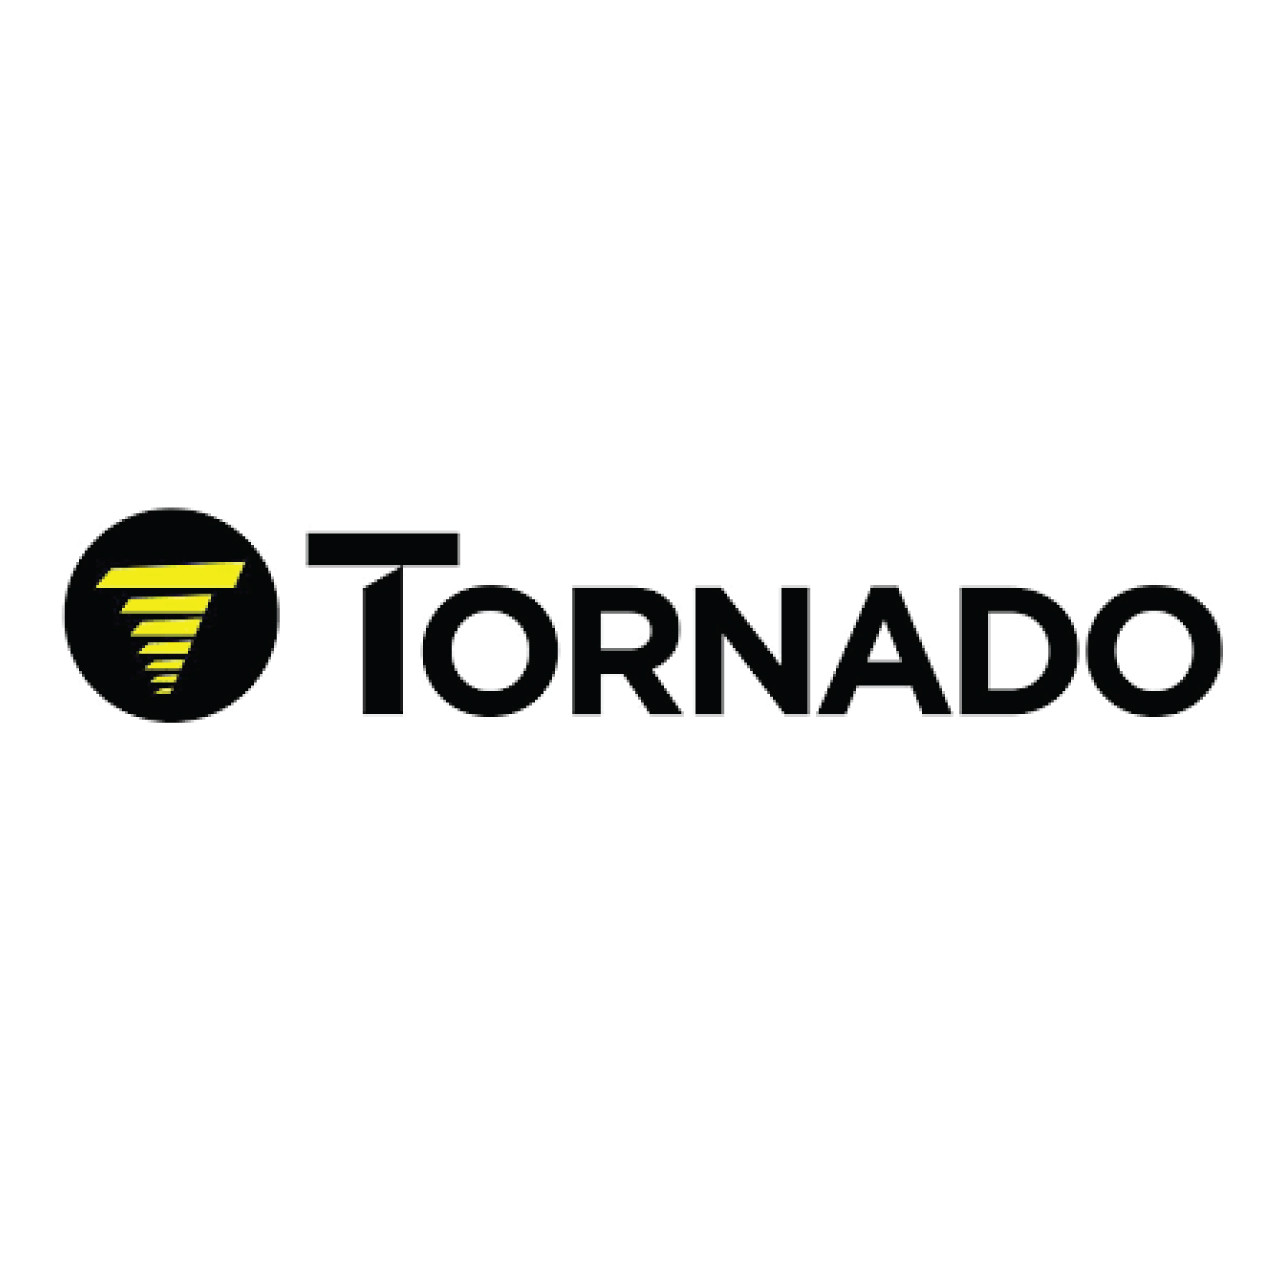 02-4546-0000, Tornado 02-4546-0000, Tornado FLEXI LIQUID TIGHT FITTING SEALCON CF25MA-BK AND NM25BK, Tornado parts